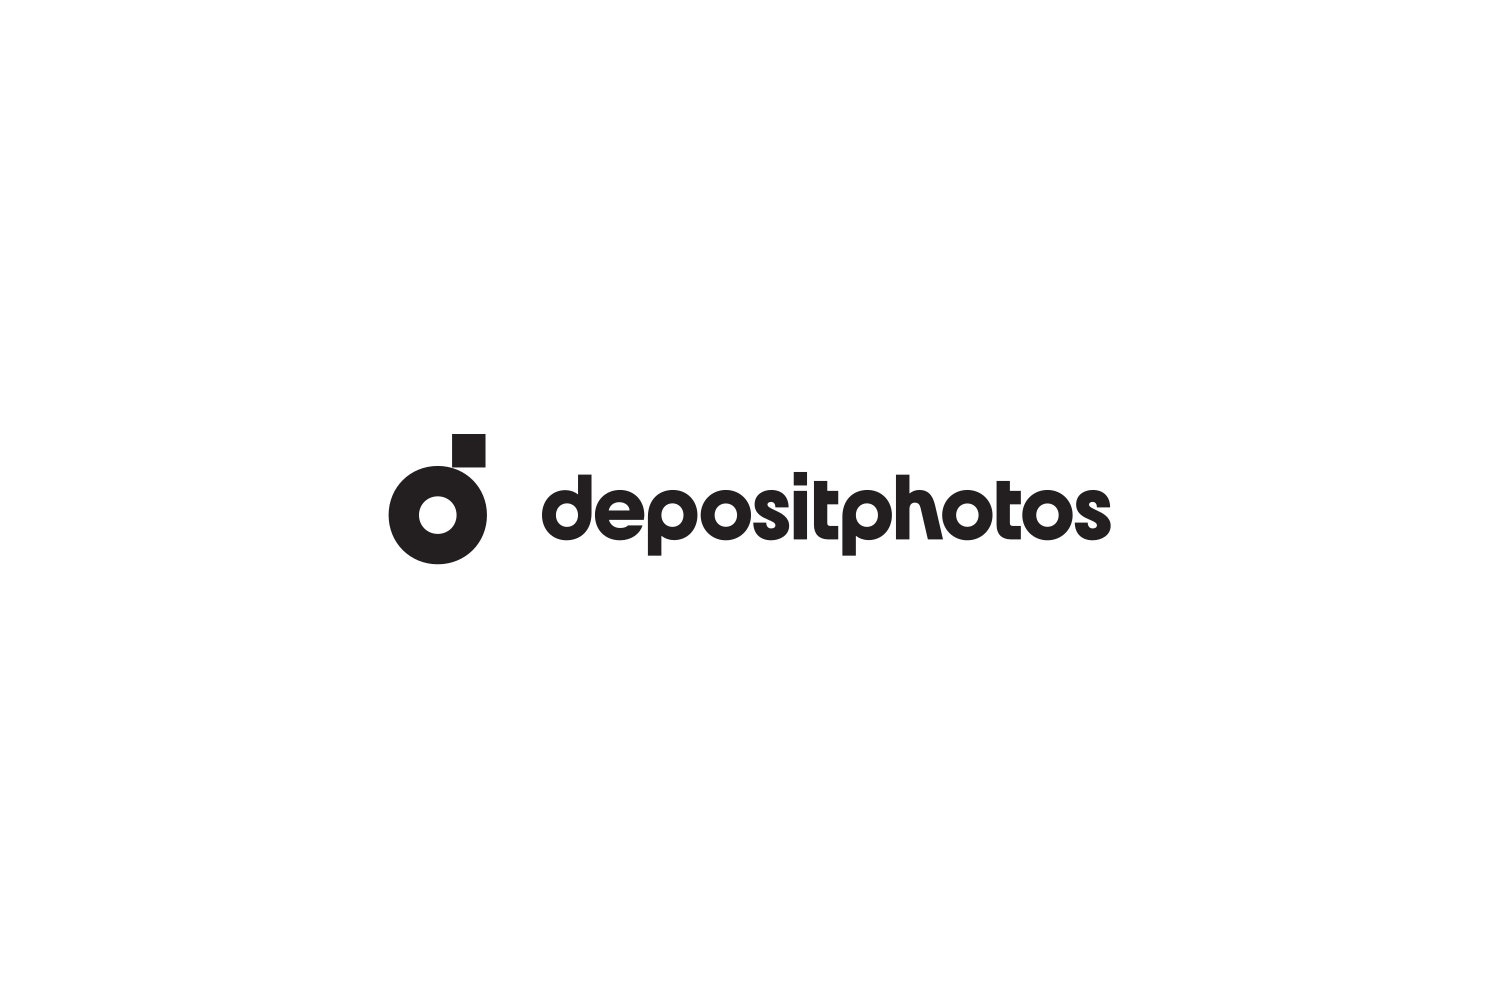 Cimpress acquires Depositphotos for USD 85m 7